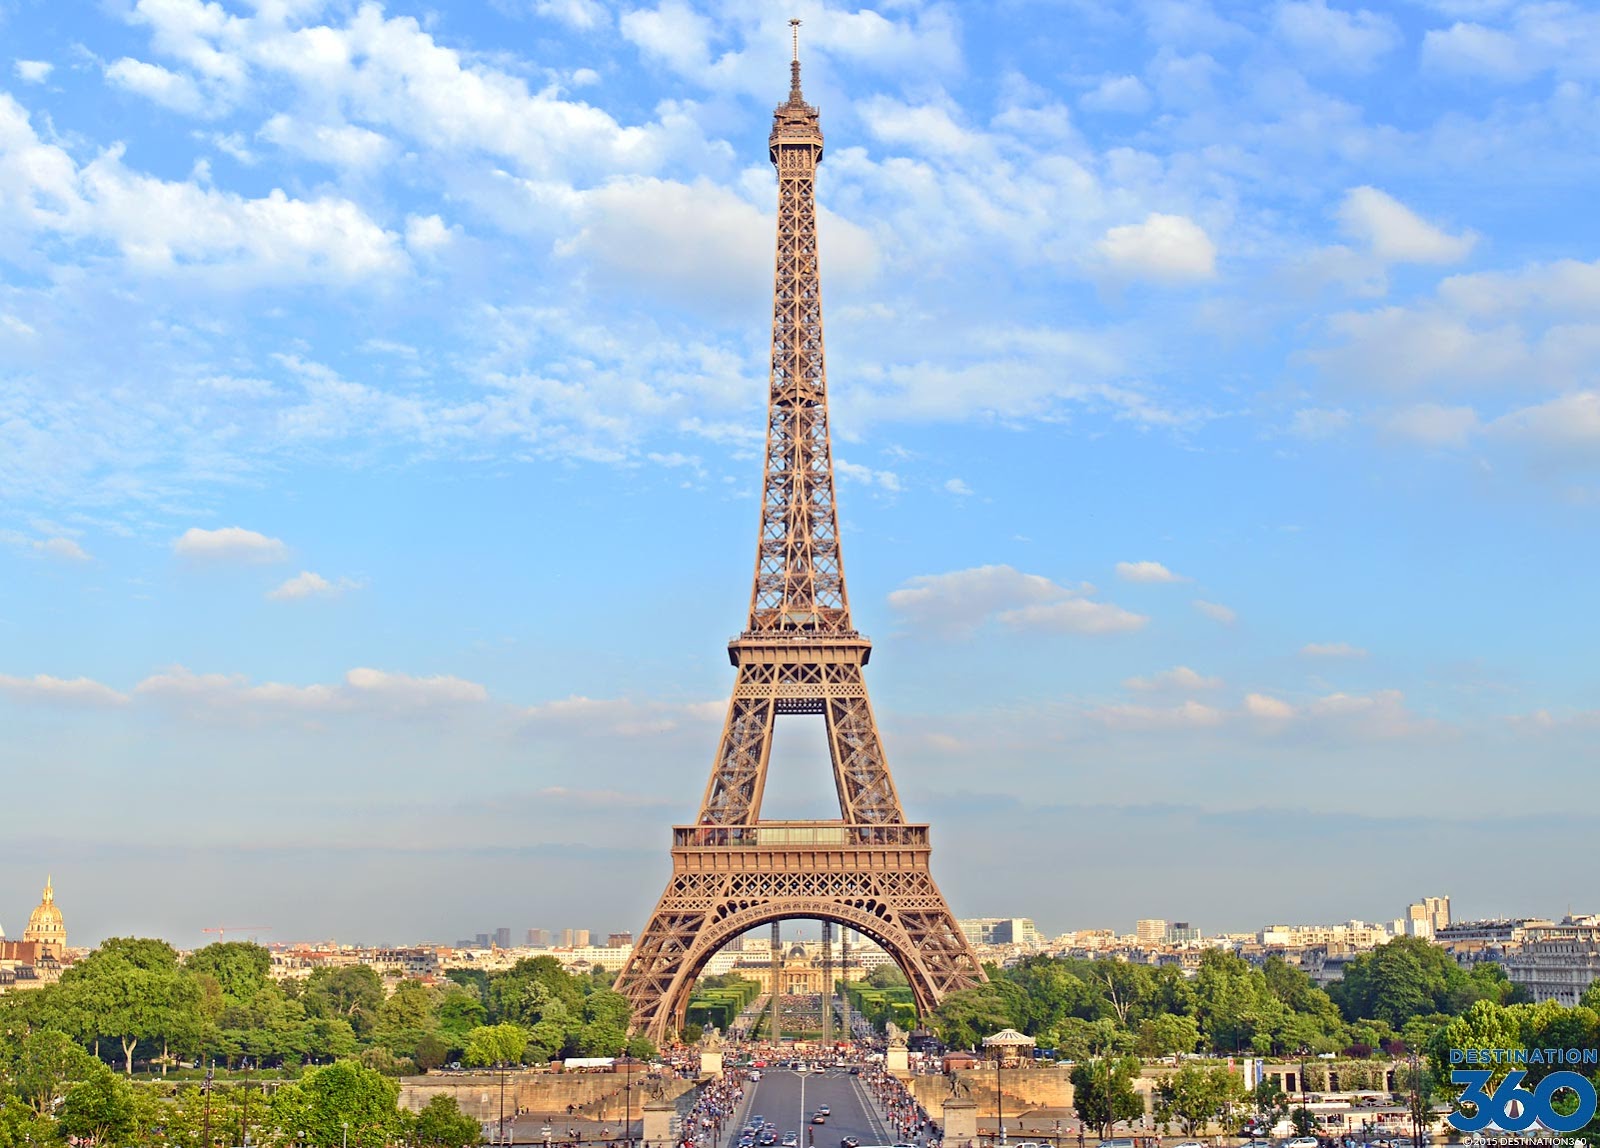 51 Top Hd Wallpaper: Eiffel Tower HD Wallpaper Free Download